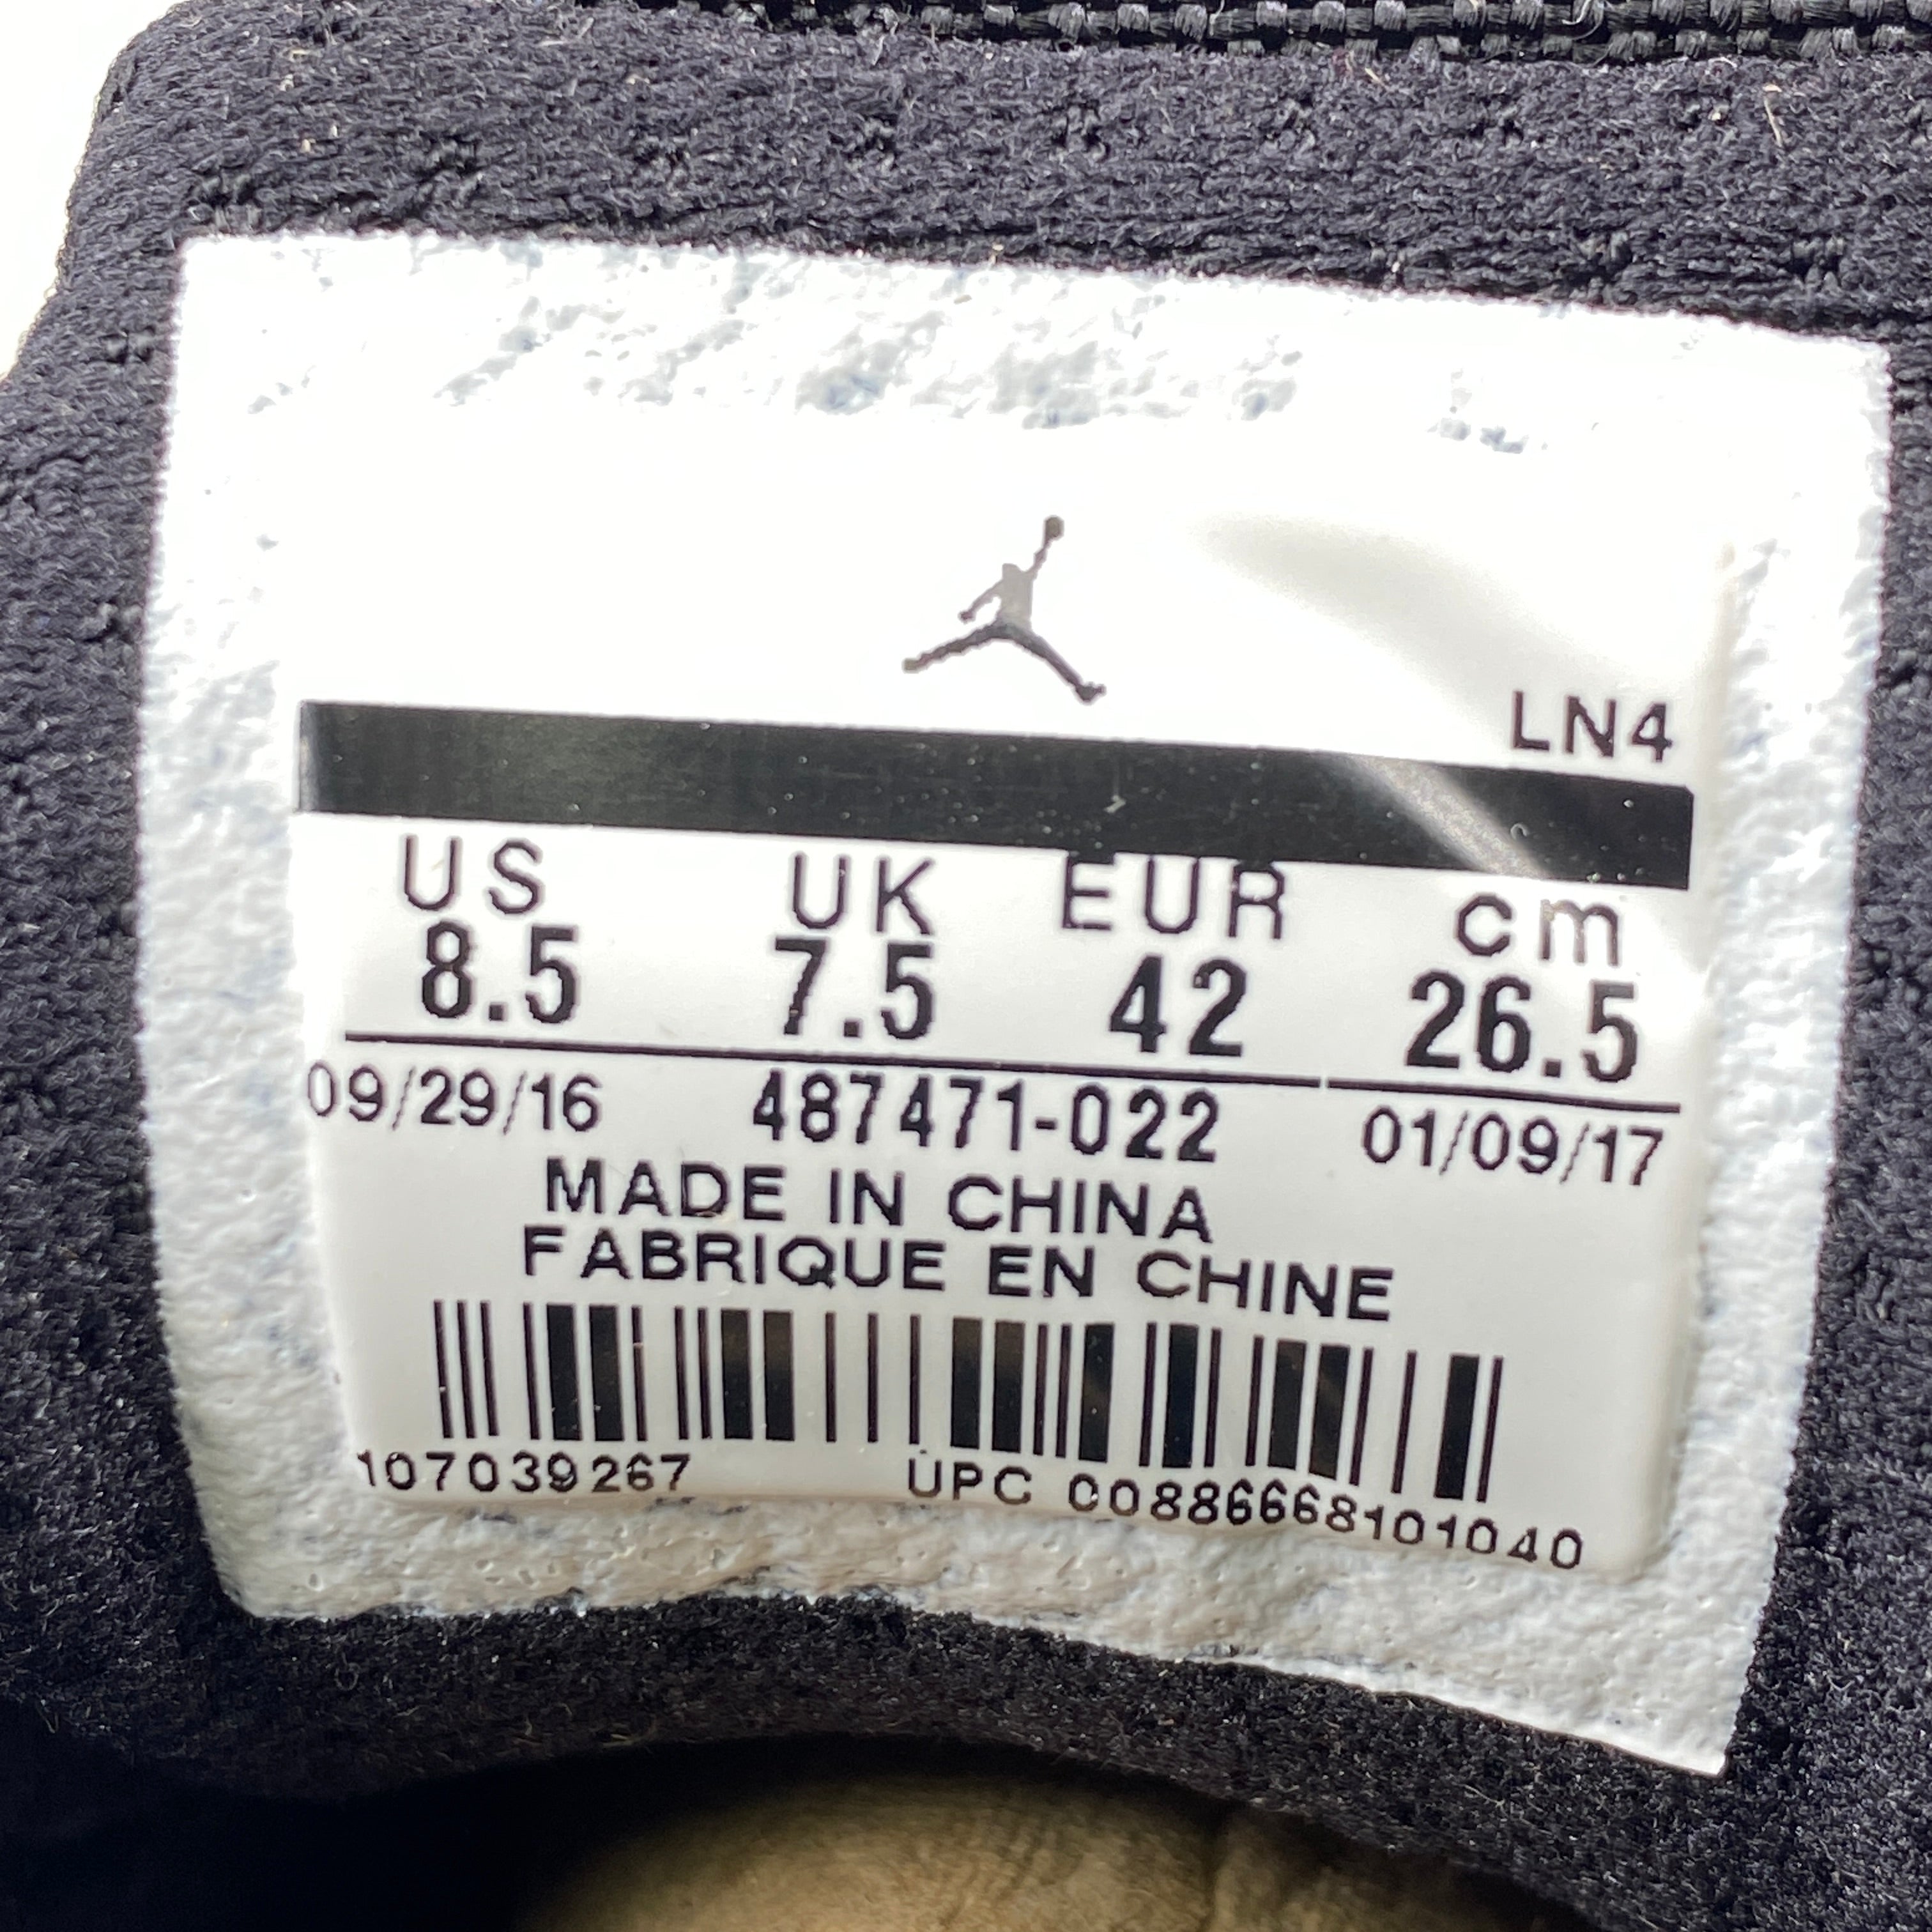 Air Jordan 14 Retro "Dmp Last Shot" 2017 Used Size 8.5